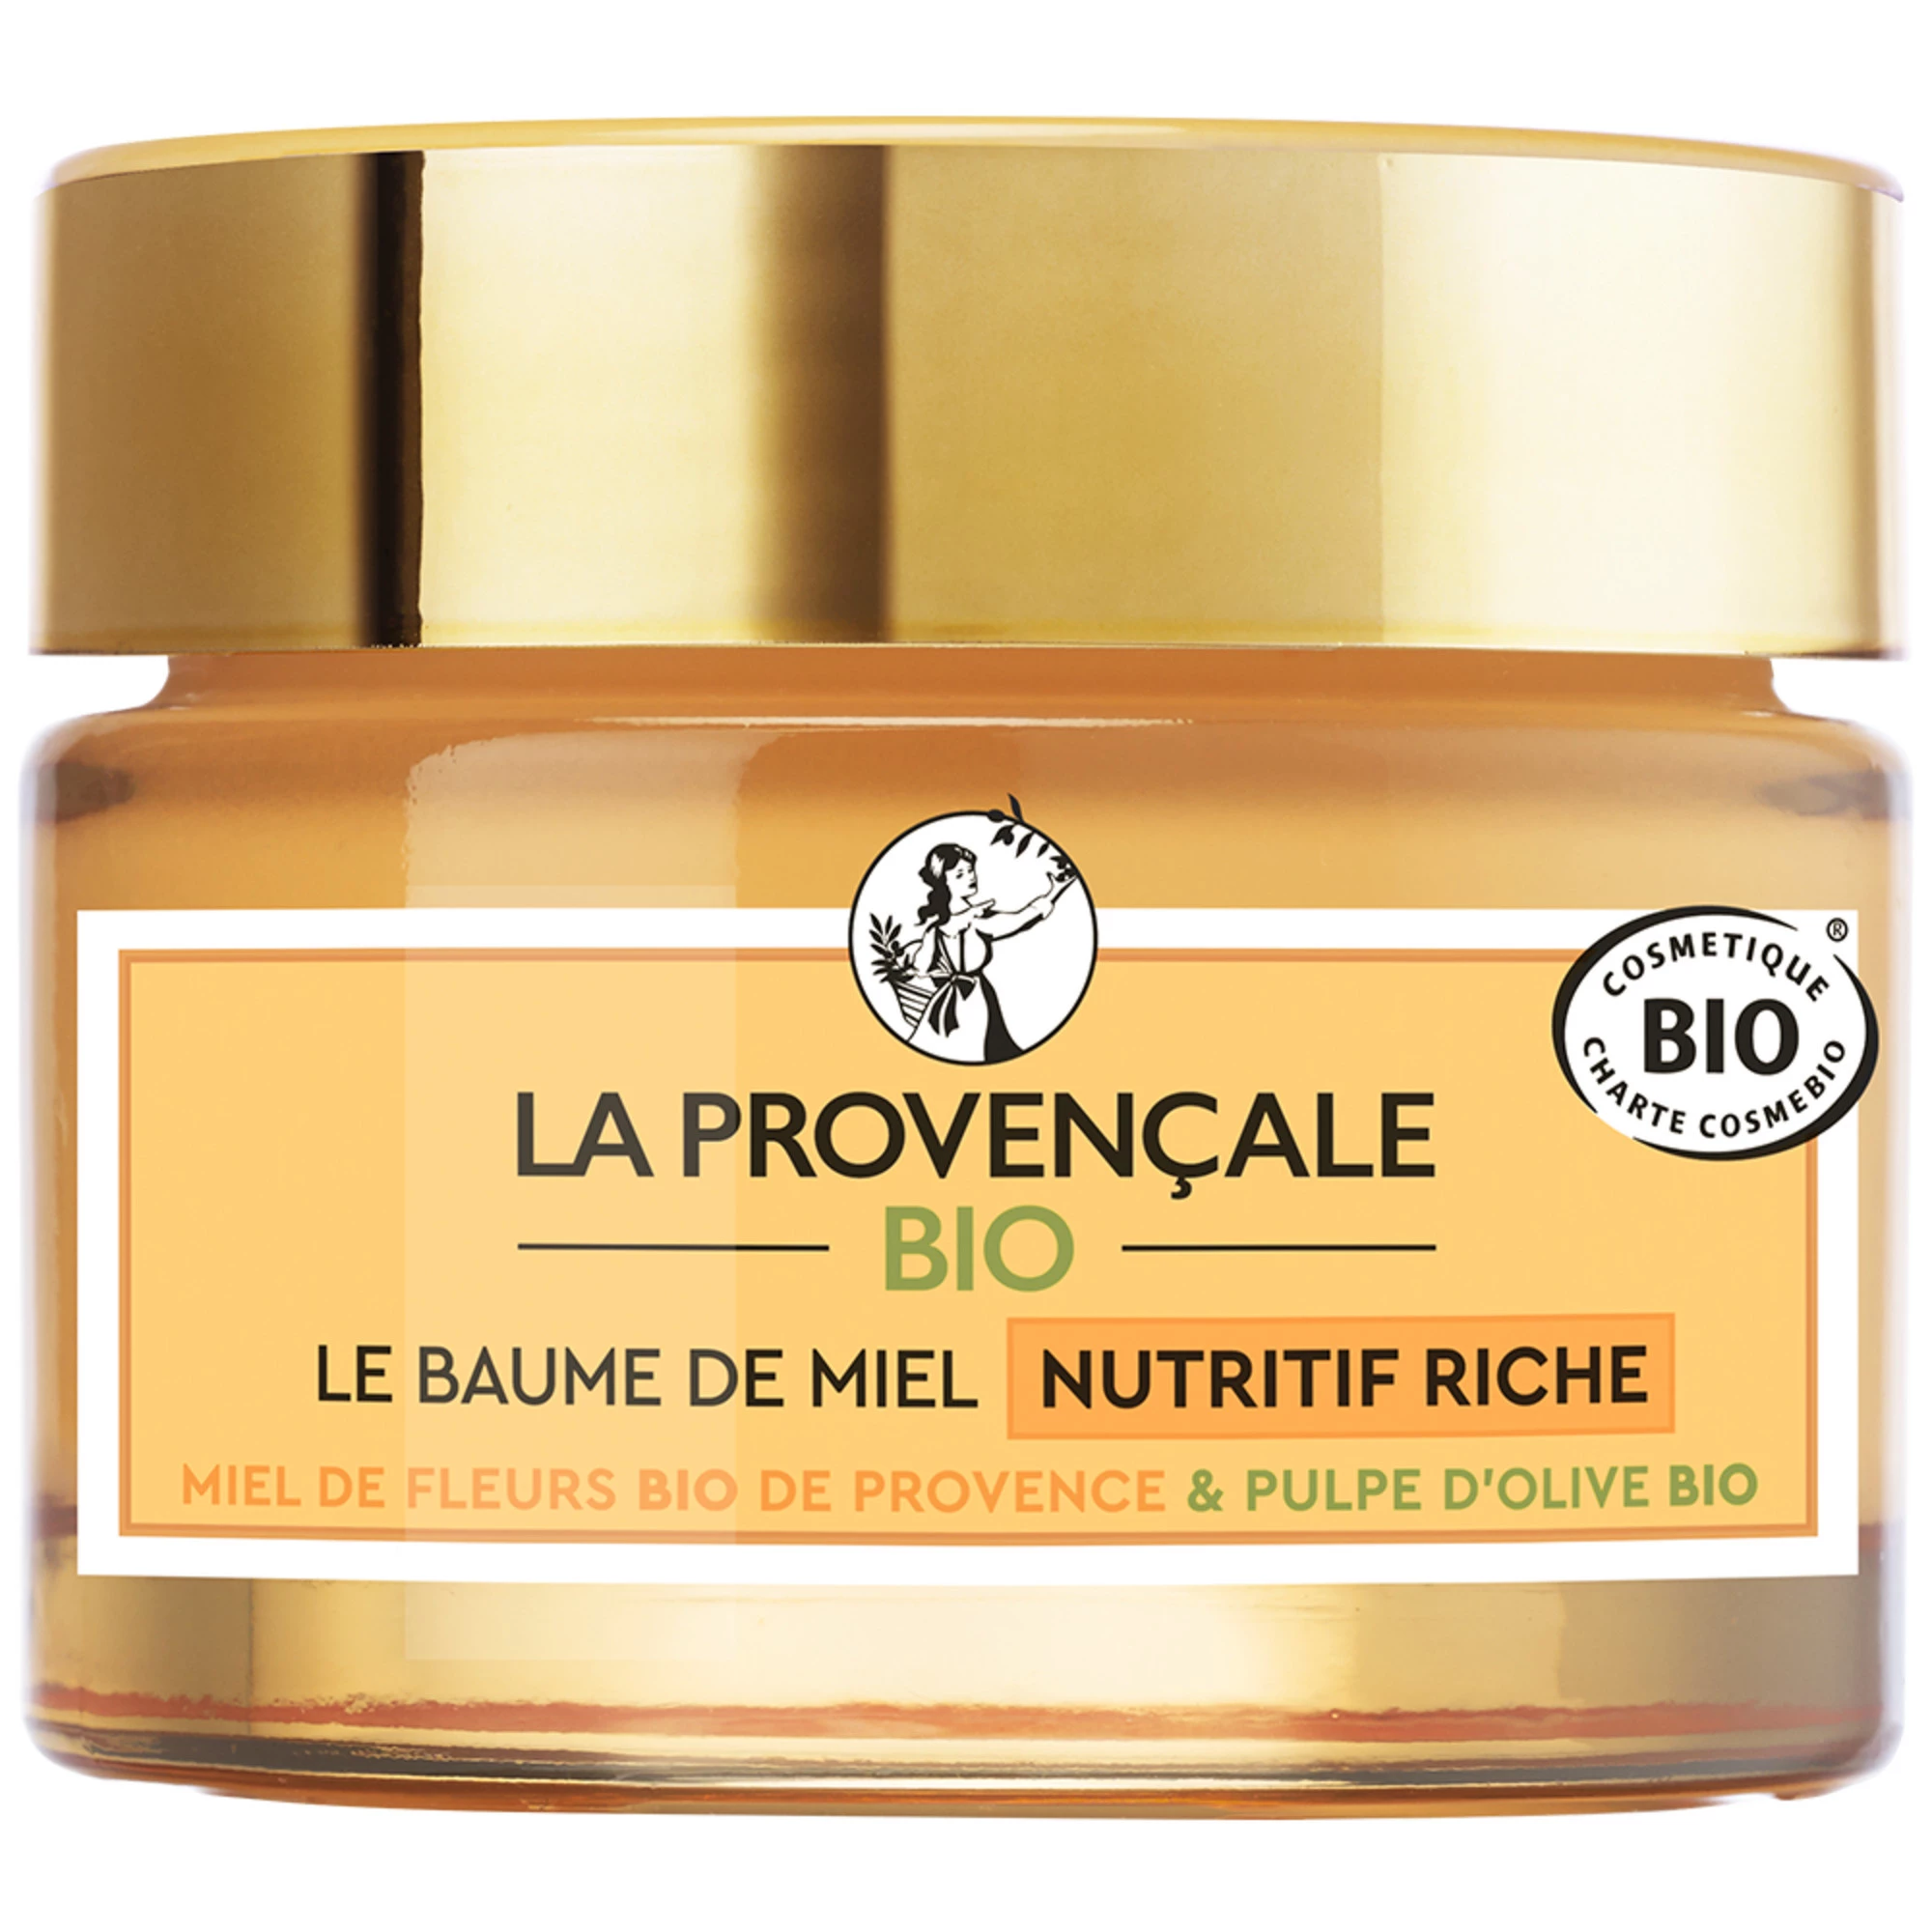 La Prov Organic Honey Body Balm 50